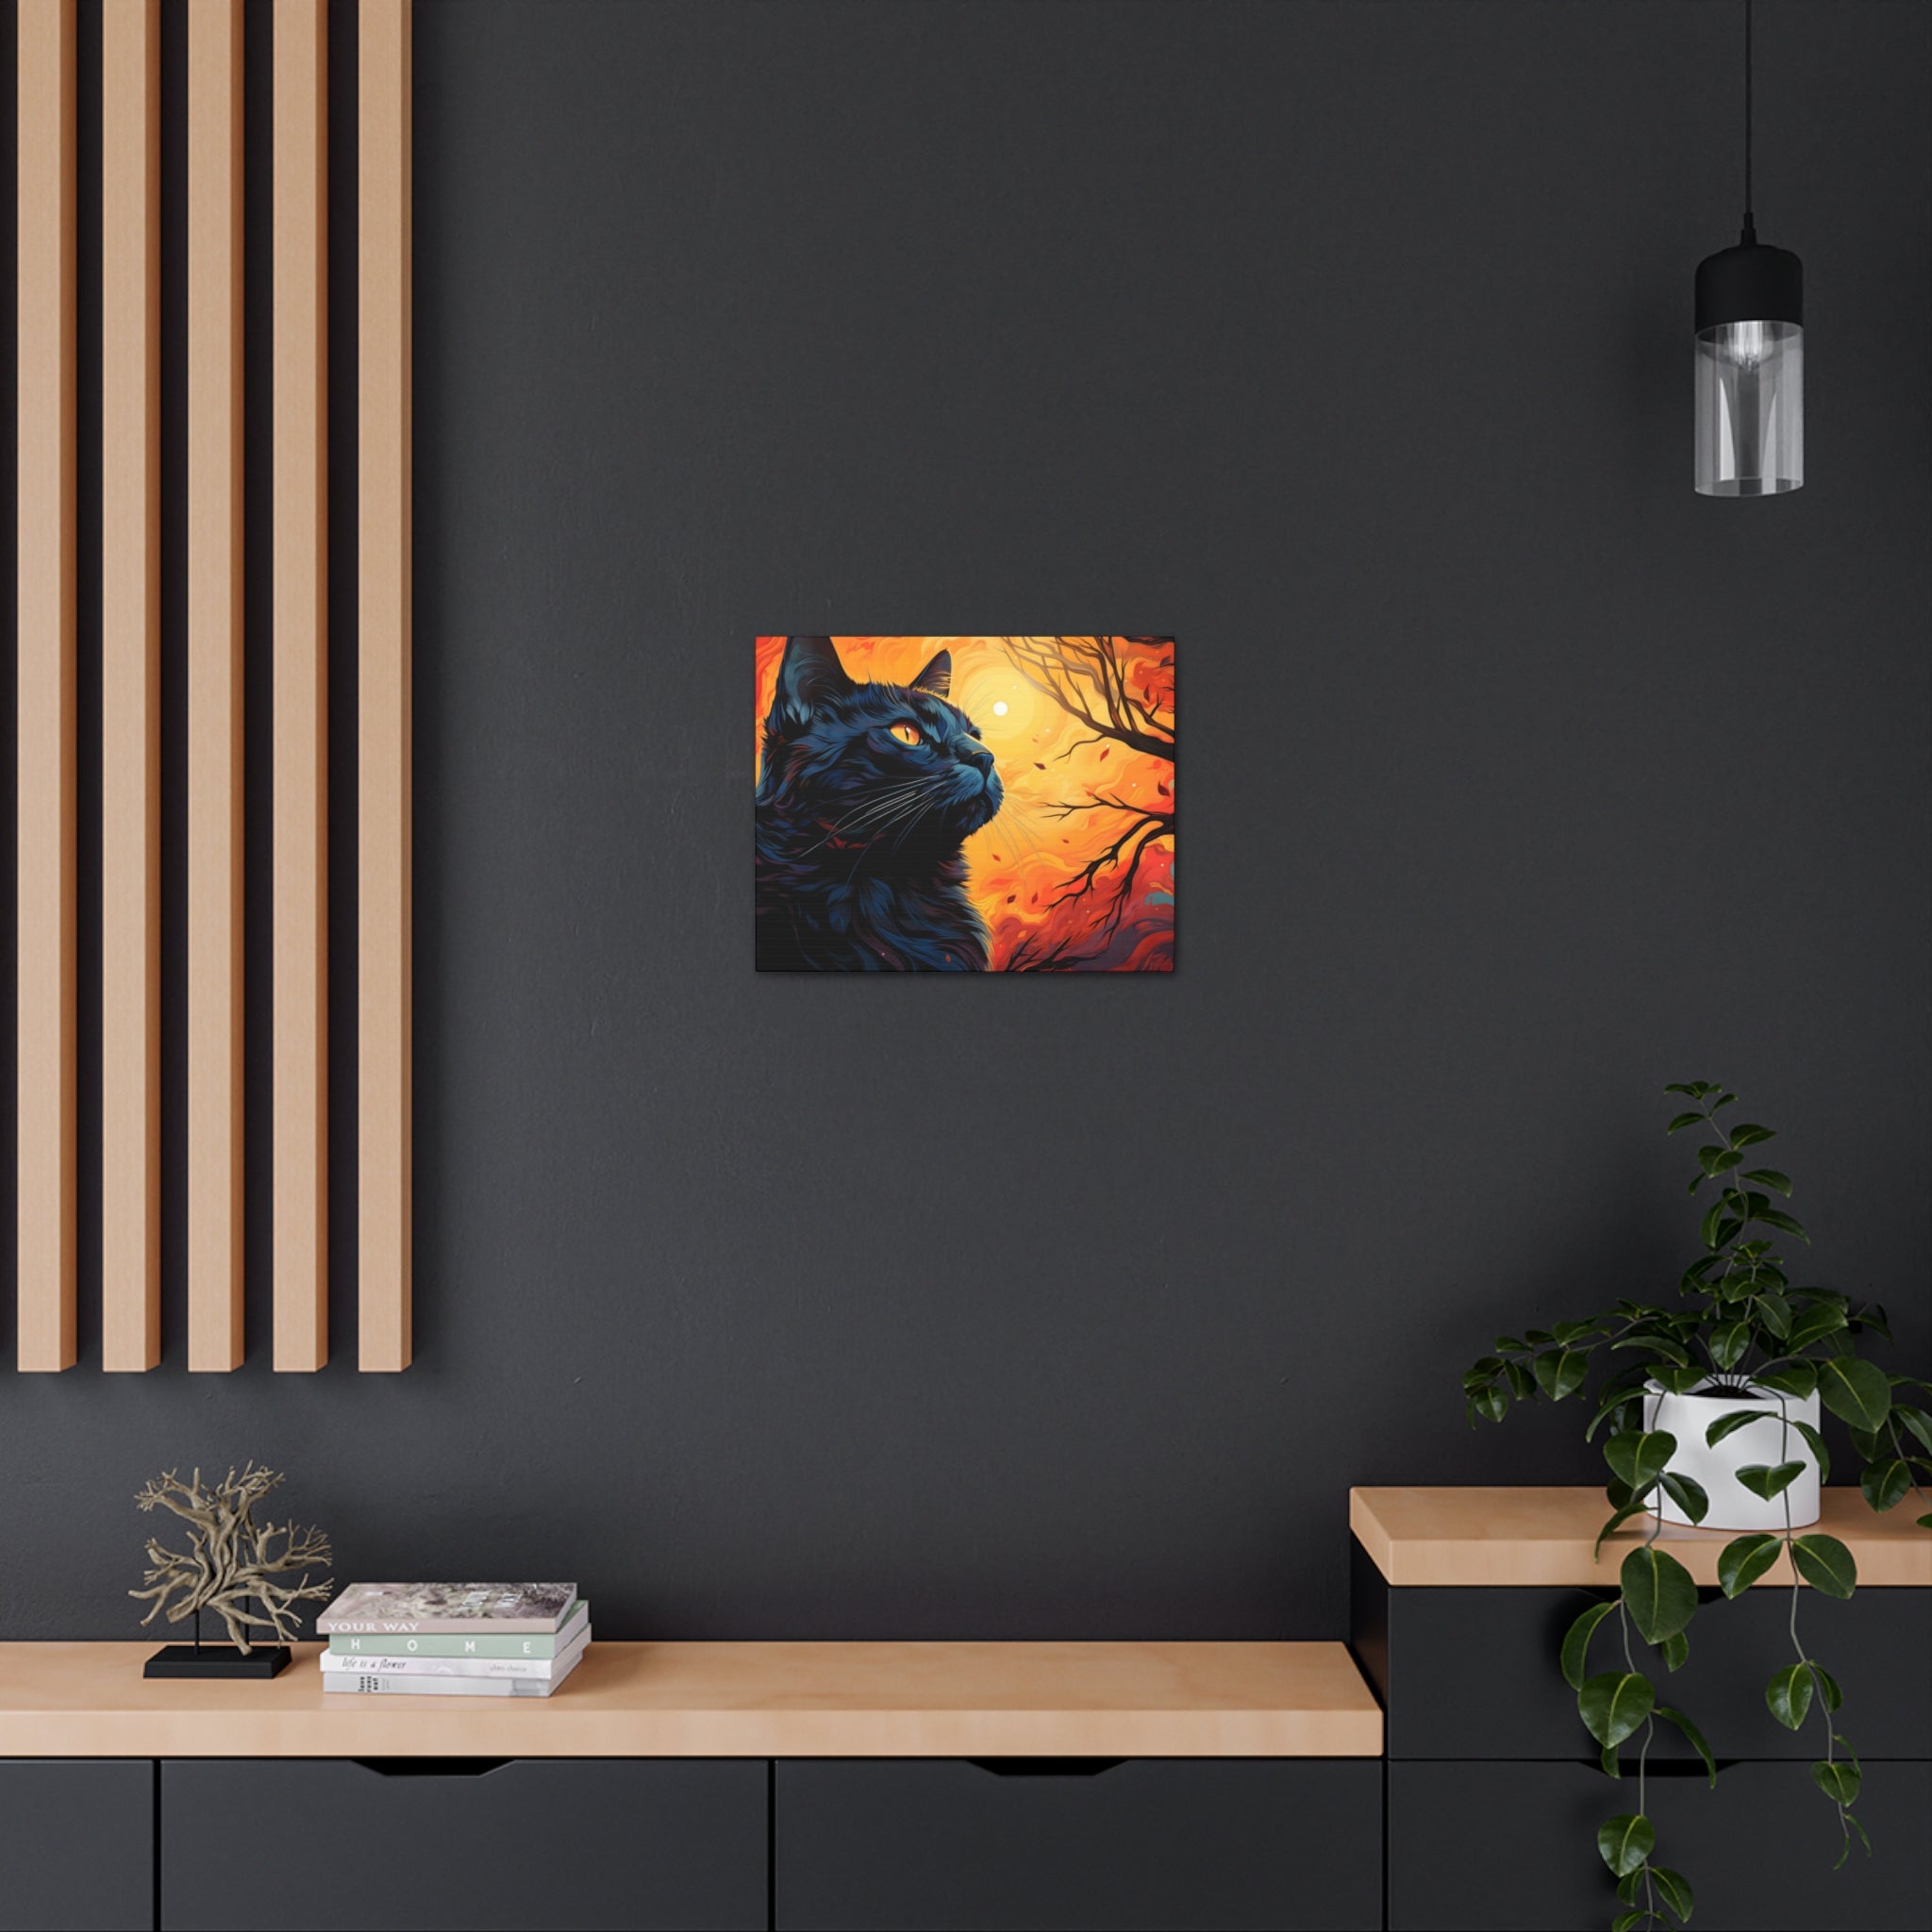 Fiery Sun Cat Canvas Print